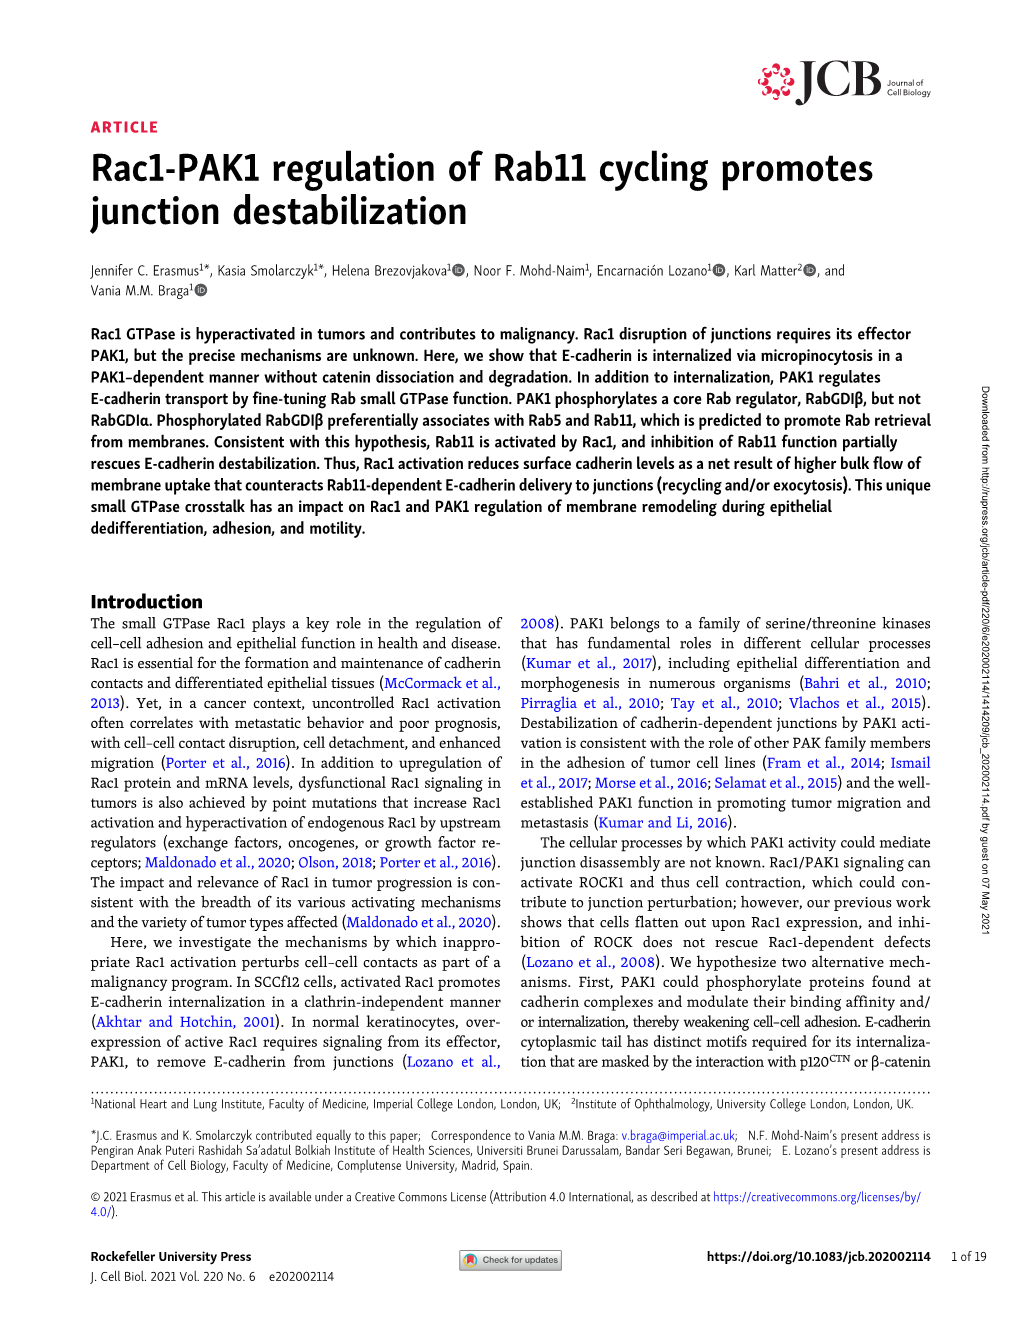 Rac1-PAK1 Regulation of Rab11 Cycling Promotes Junction Destabilization